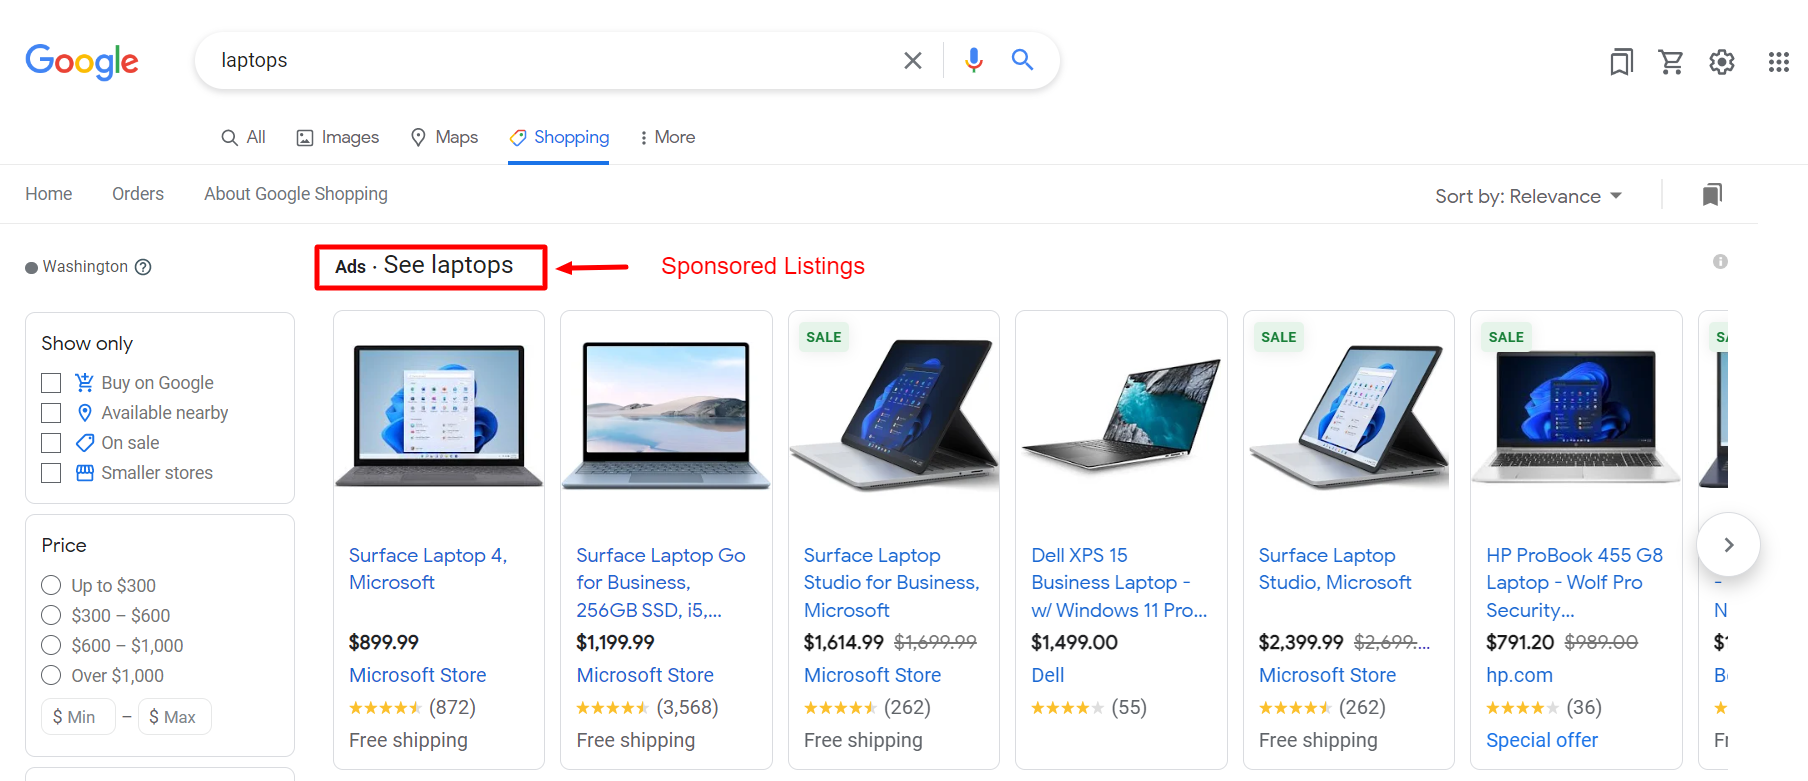 Sponsored Listings - Free listings across Google surfaces